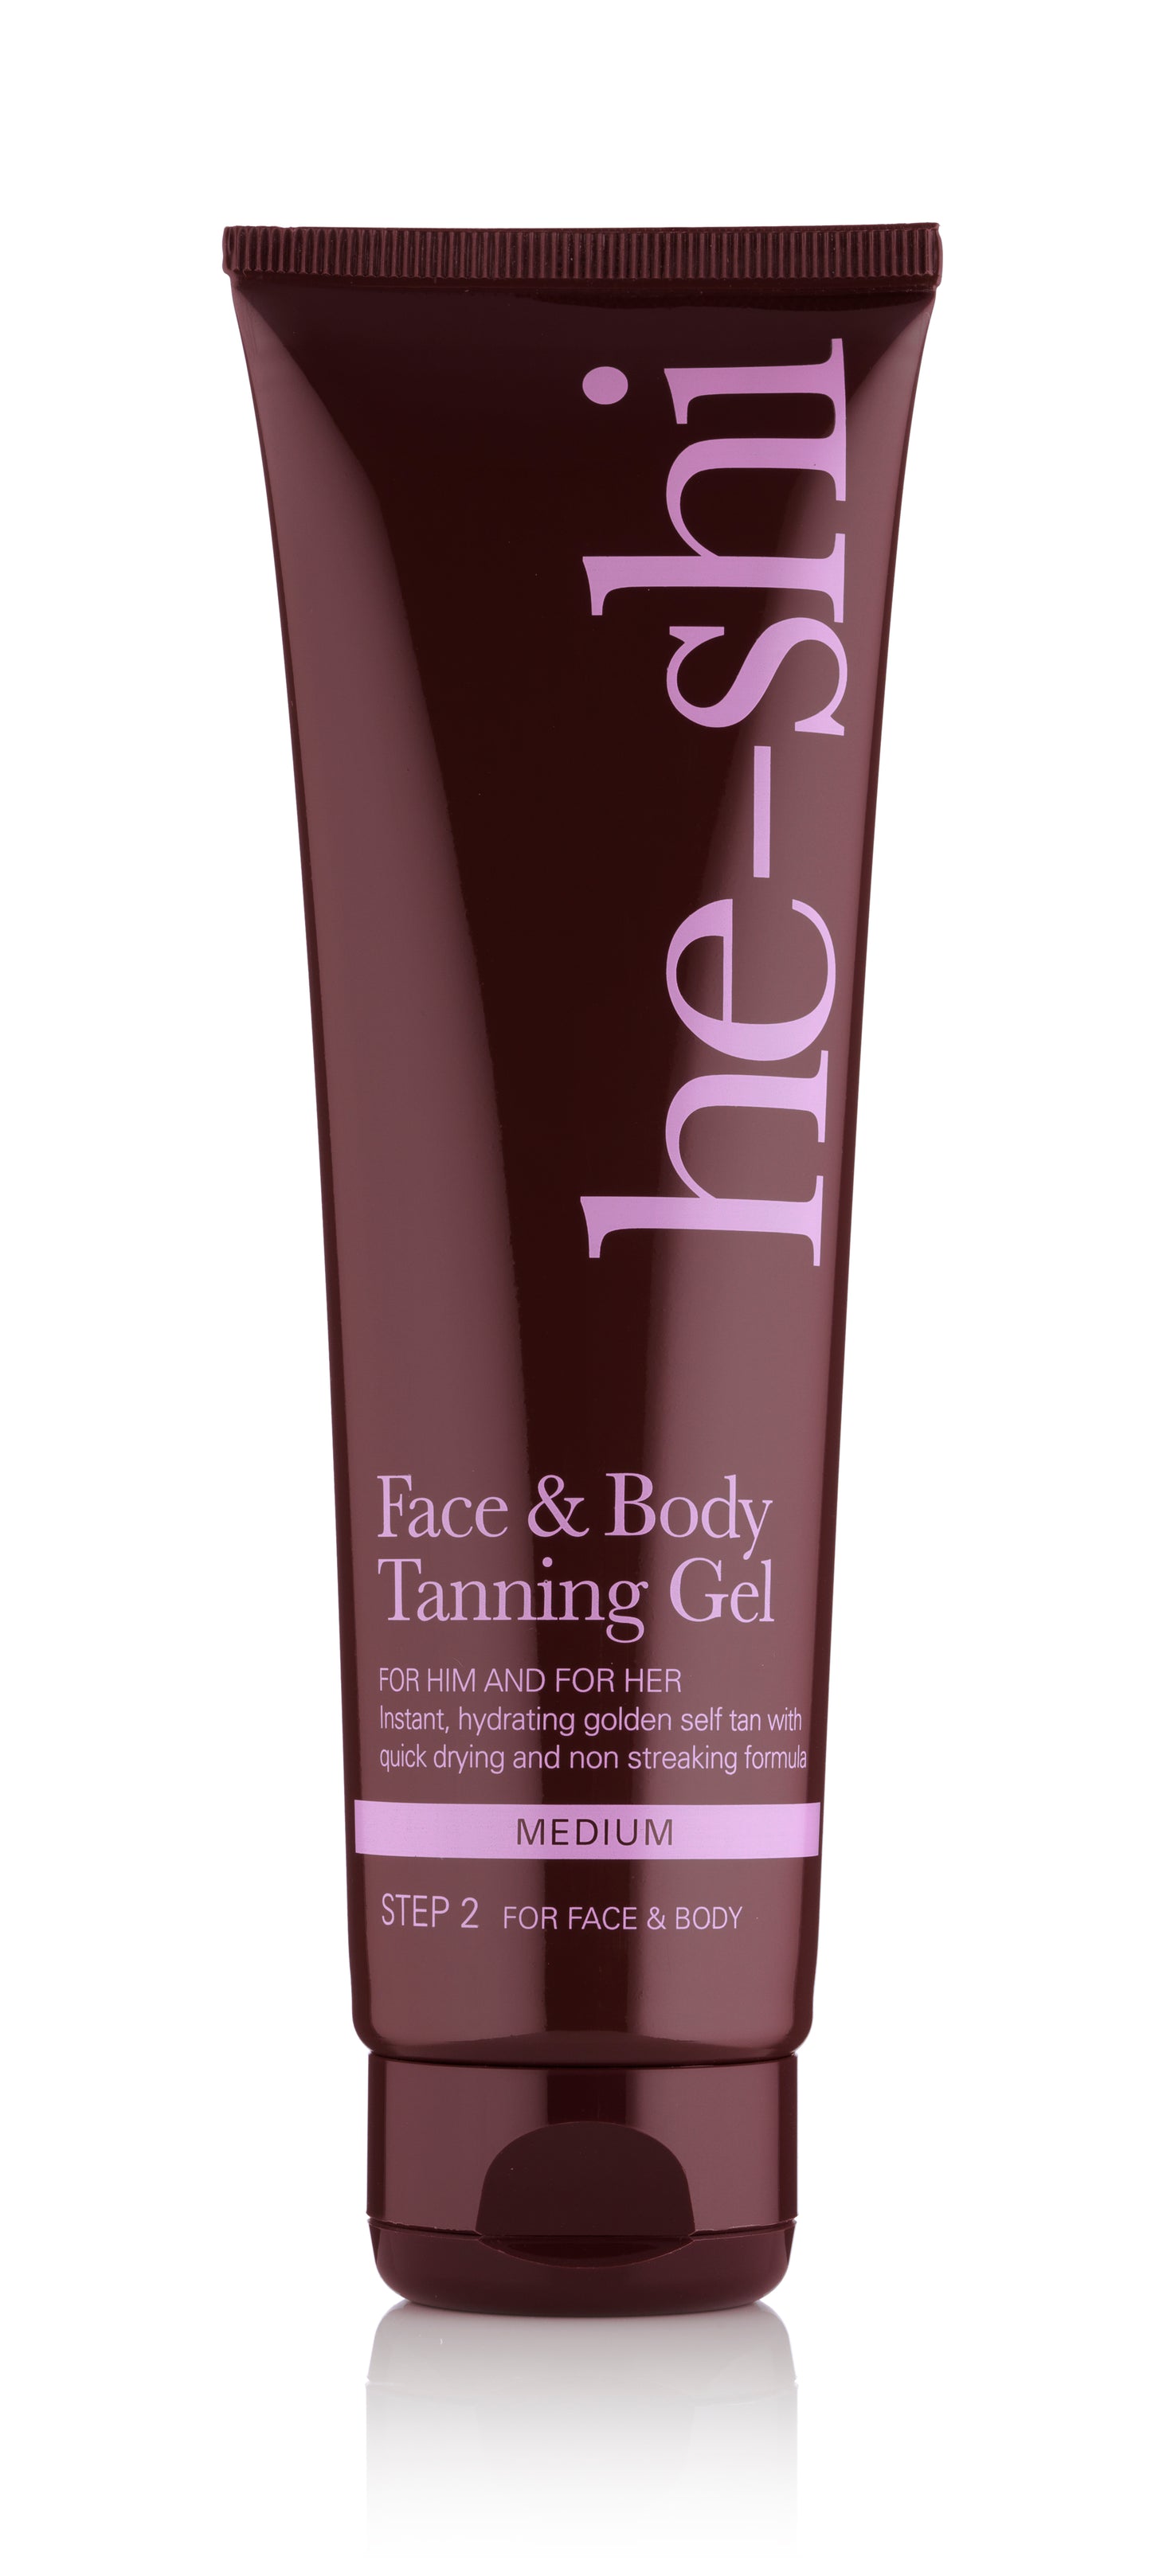 Face & Body Tanning Gel